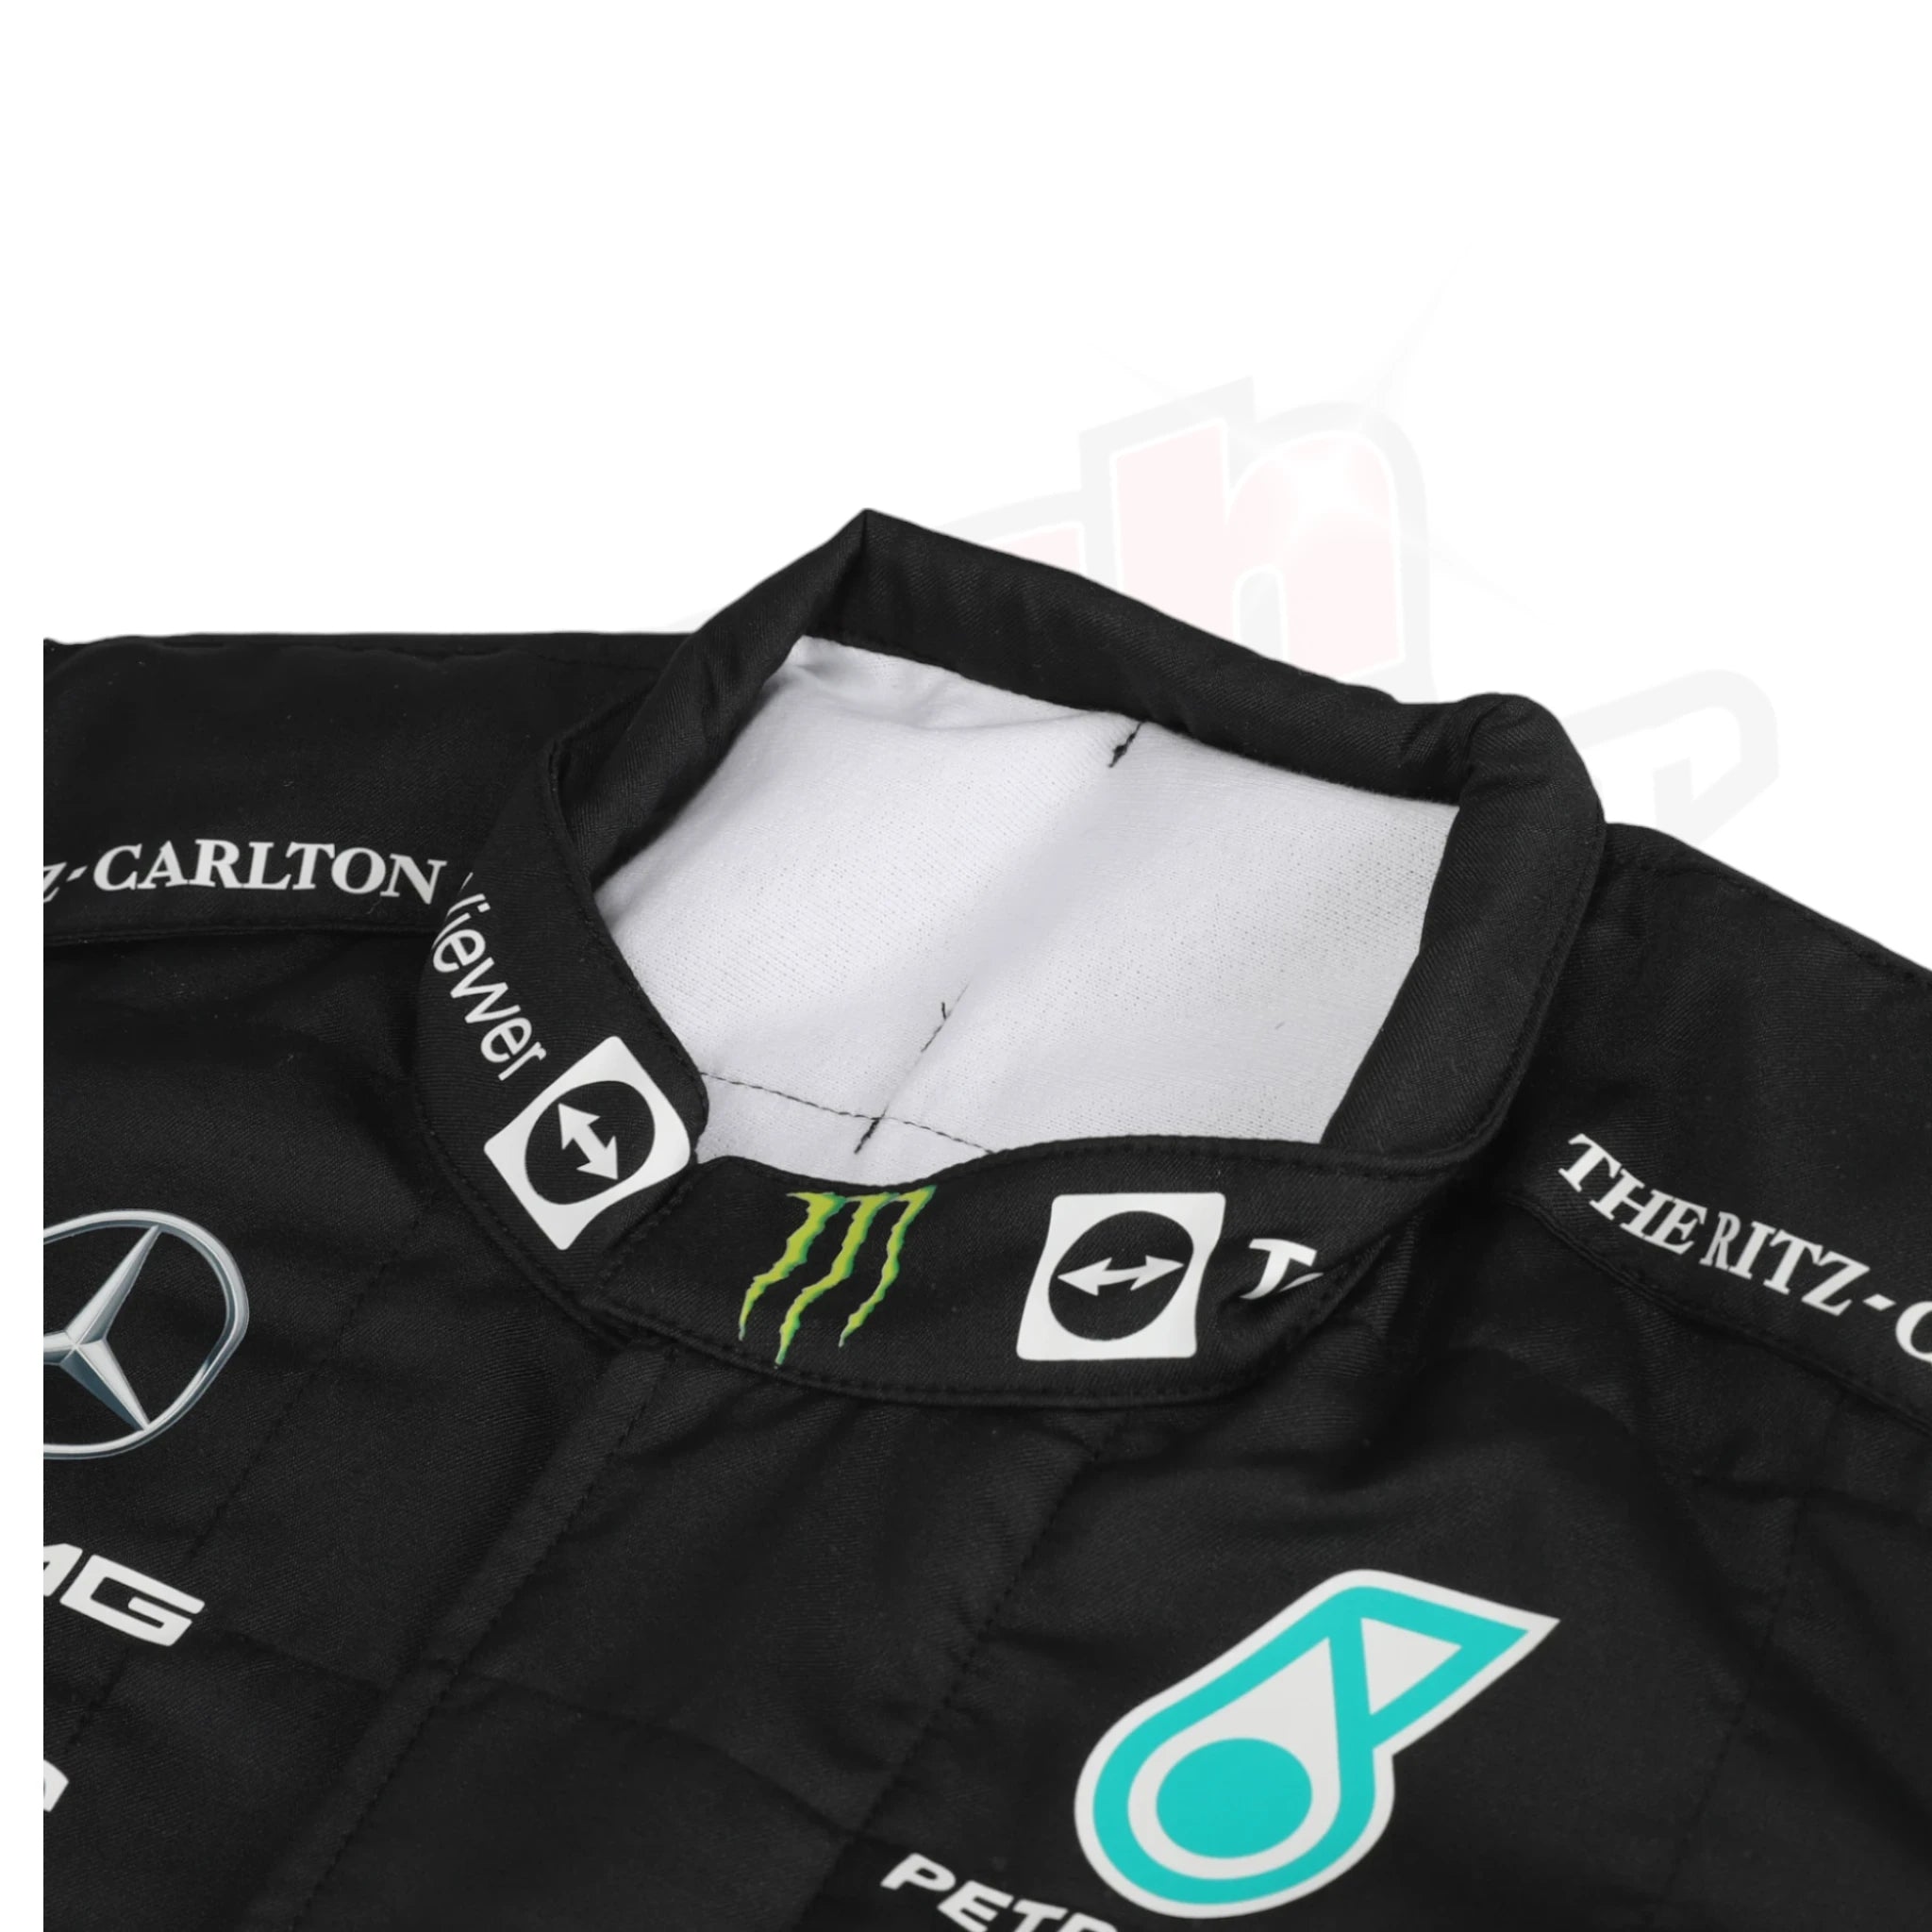 2022 Lewis Hamilton Mercedes-AMG Petronas F1 Team Replica Race Suit